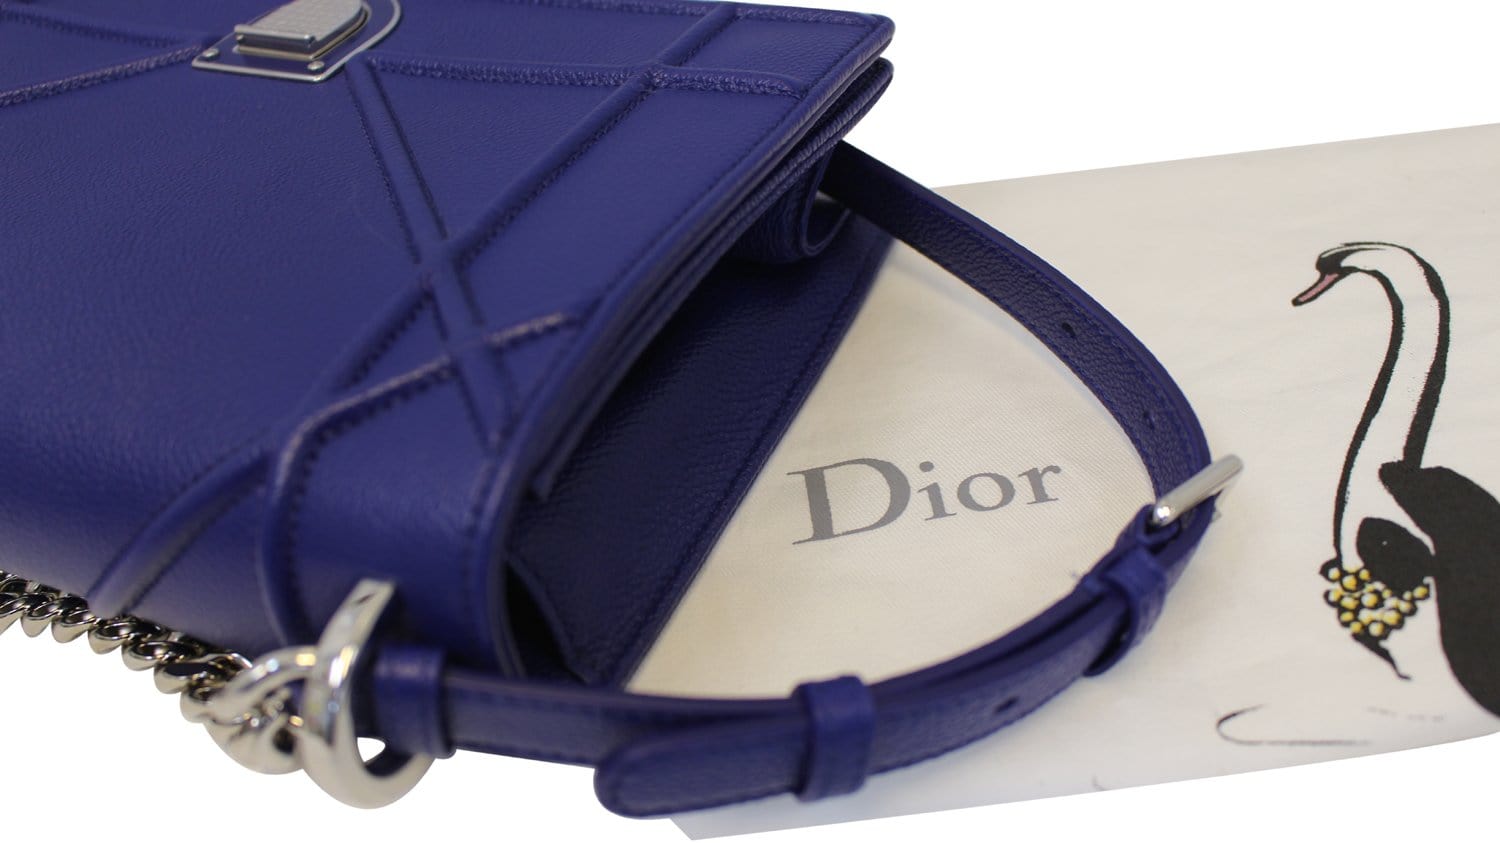 CHRISTIAN DIOR Handbag - Blue Calfskin Leather Diorama Bag